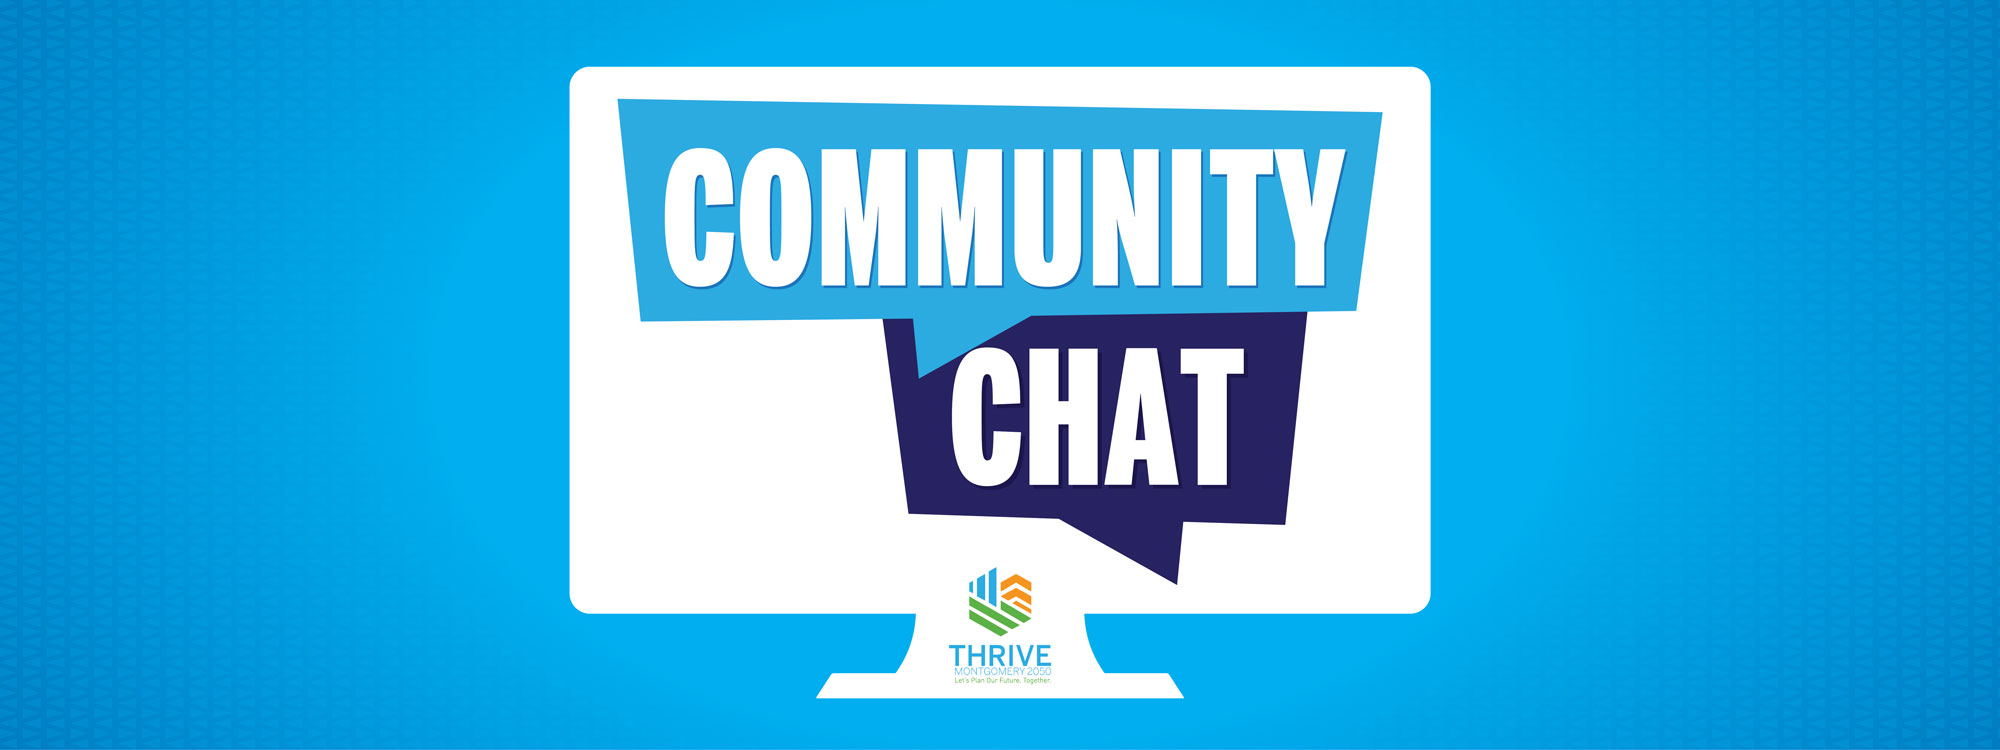 Community Chat